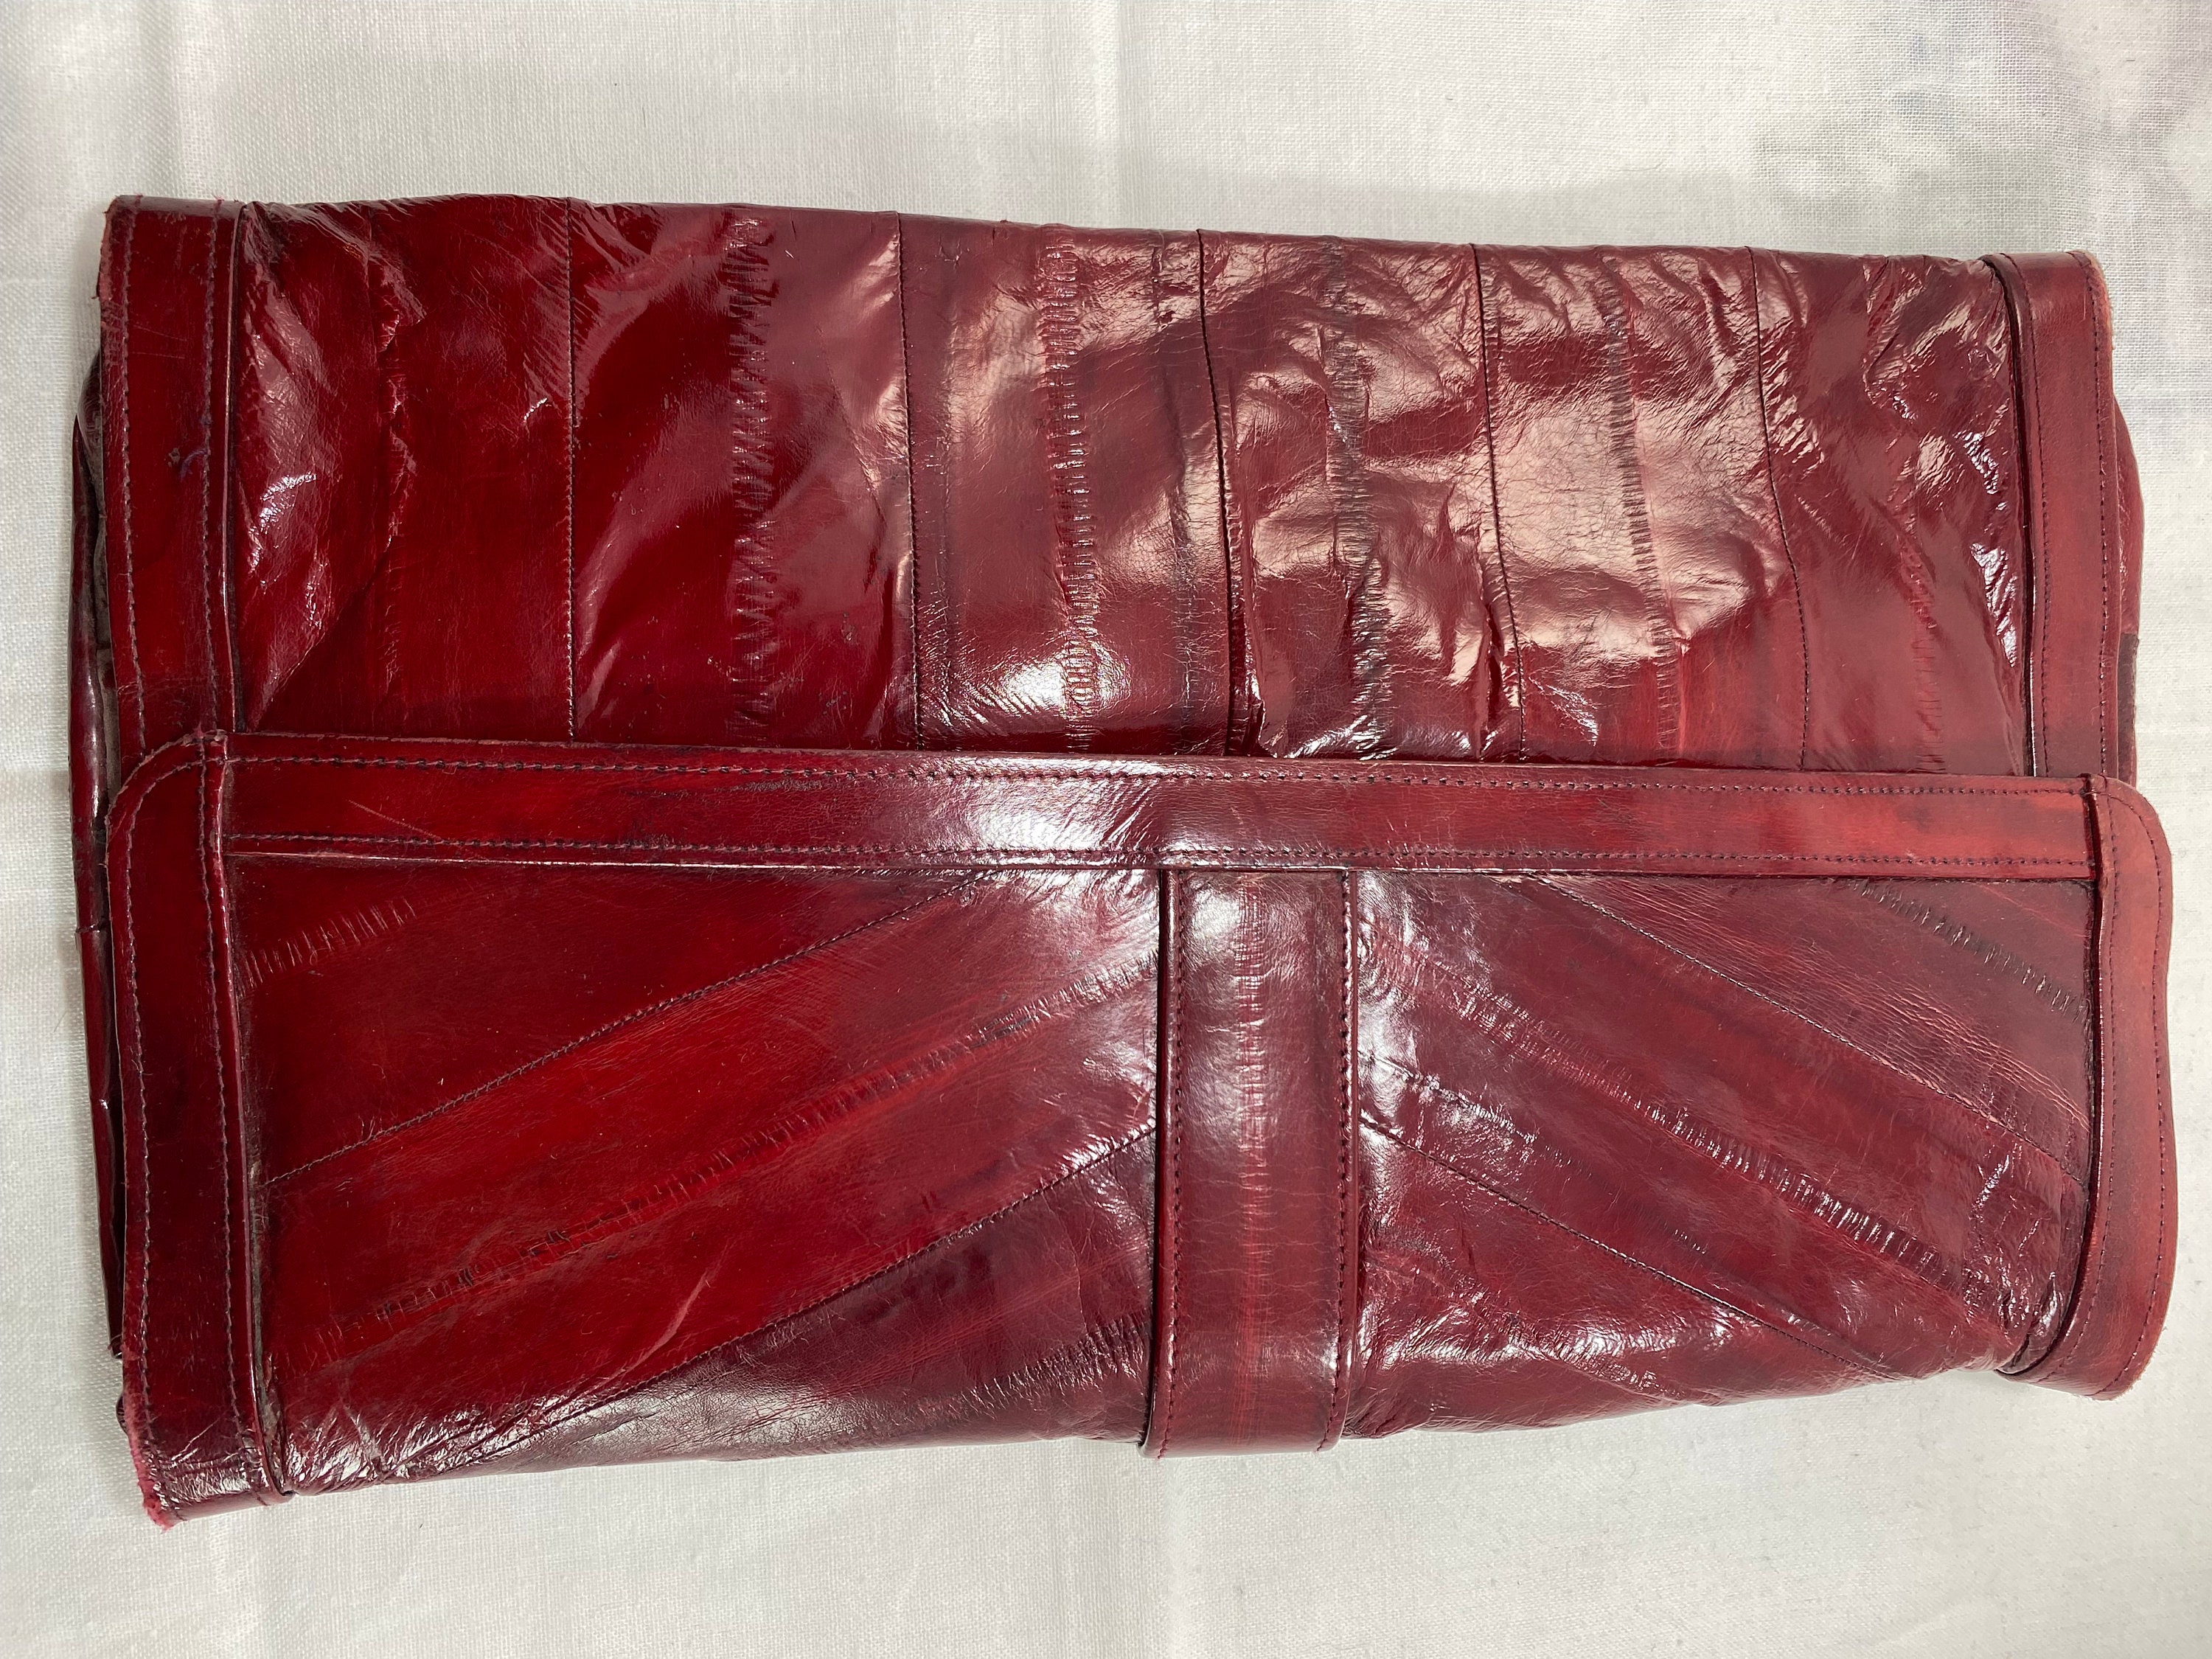 Vintage EEL Skin Purse Red Magnet-Closure - Made in Korea READ DESCRIPTION